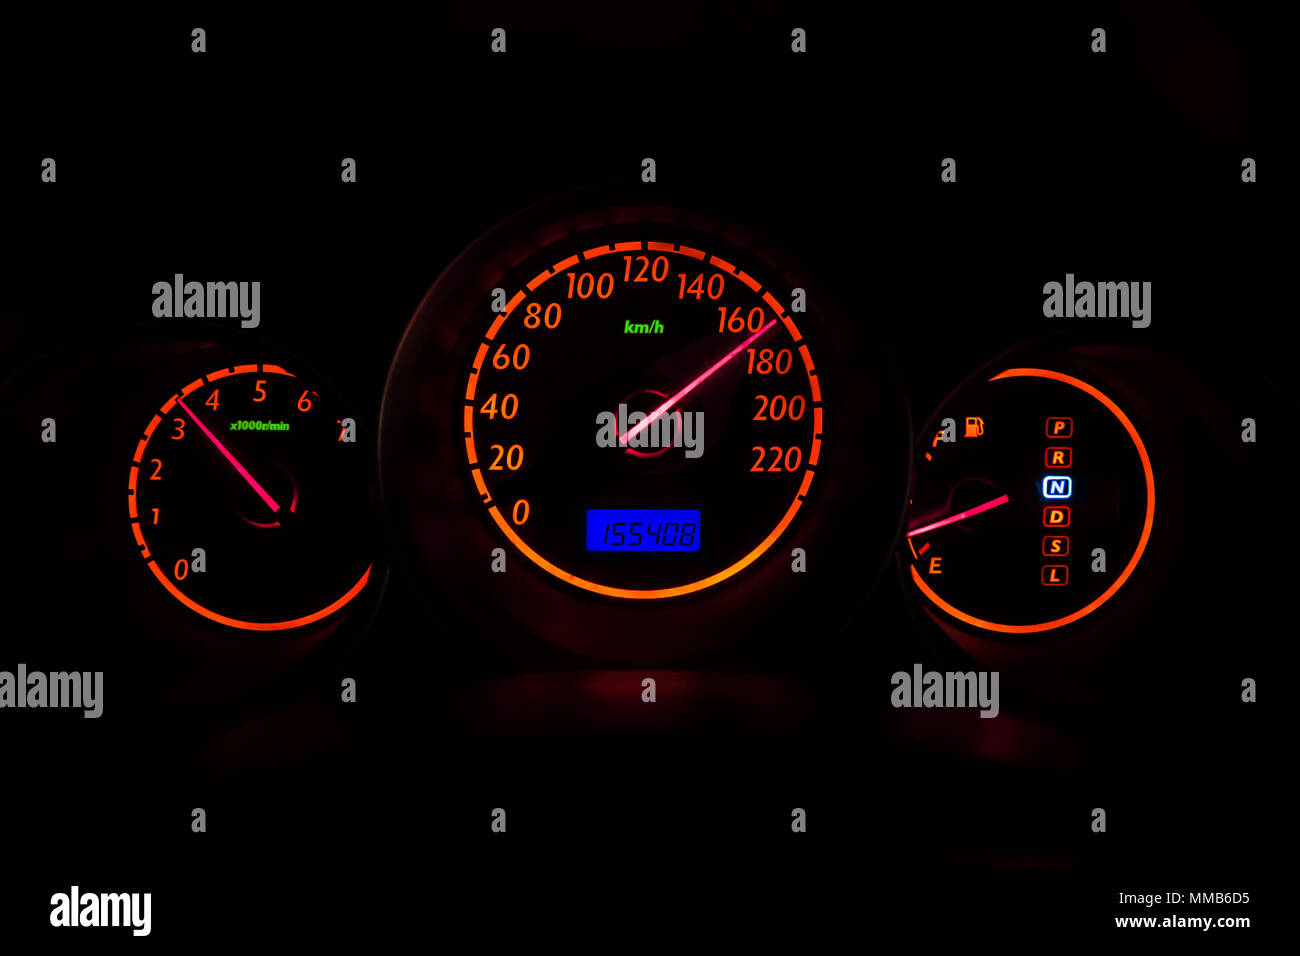 Car Gauge High speed driving at night vision vehicle illumination dashboard Stock Photo